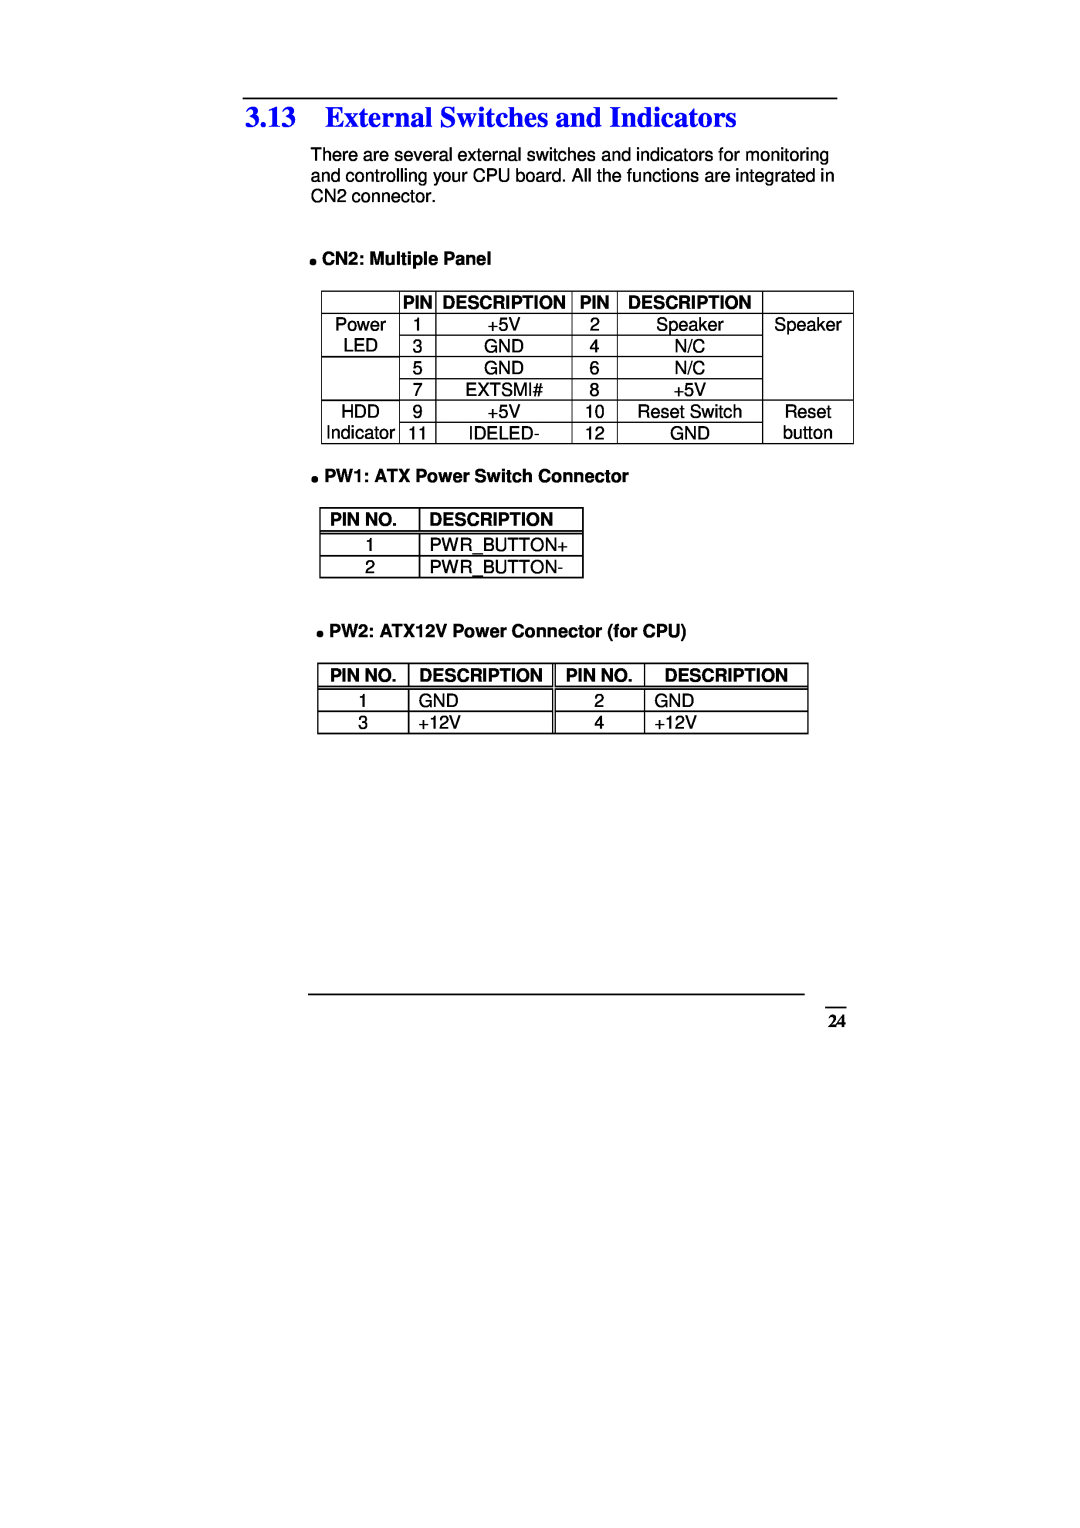 ICP DAS USA SAGP-845EV manual External Switches and Indicators, CN2 Multiple Panel, Description, Pin No 